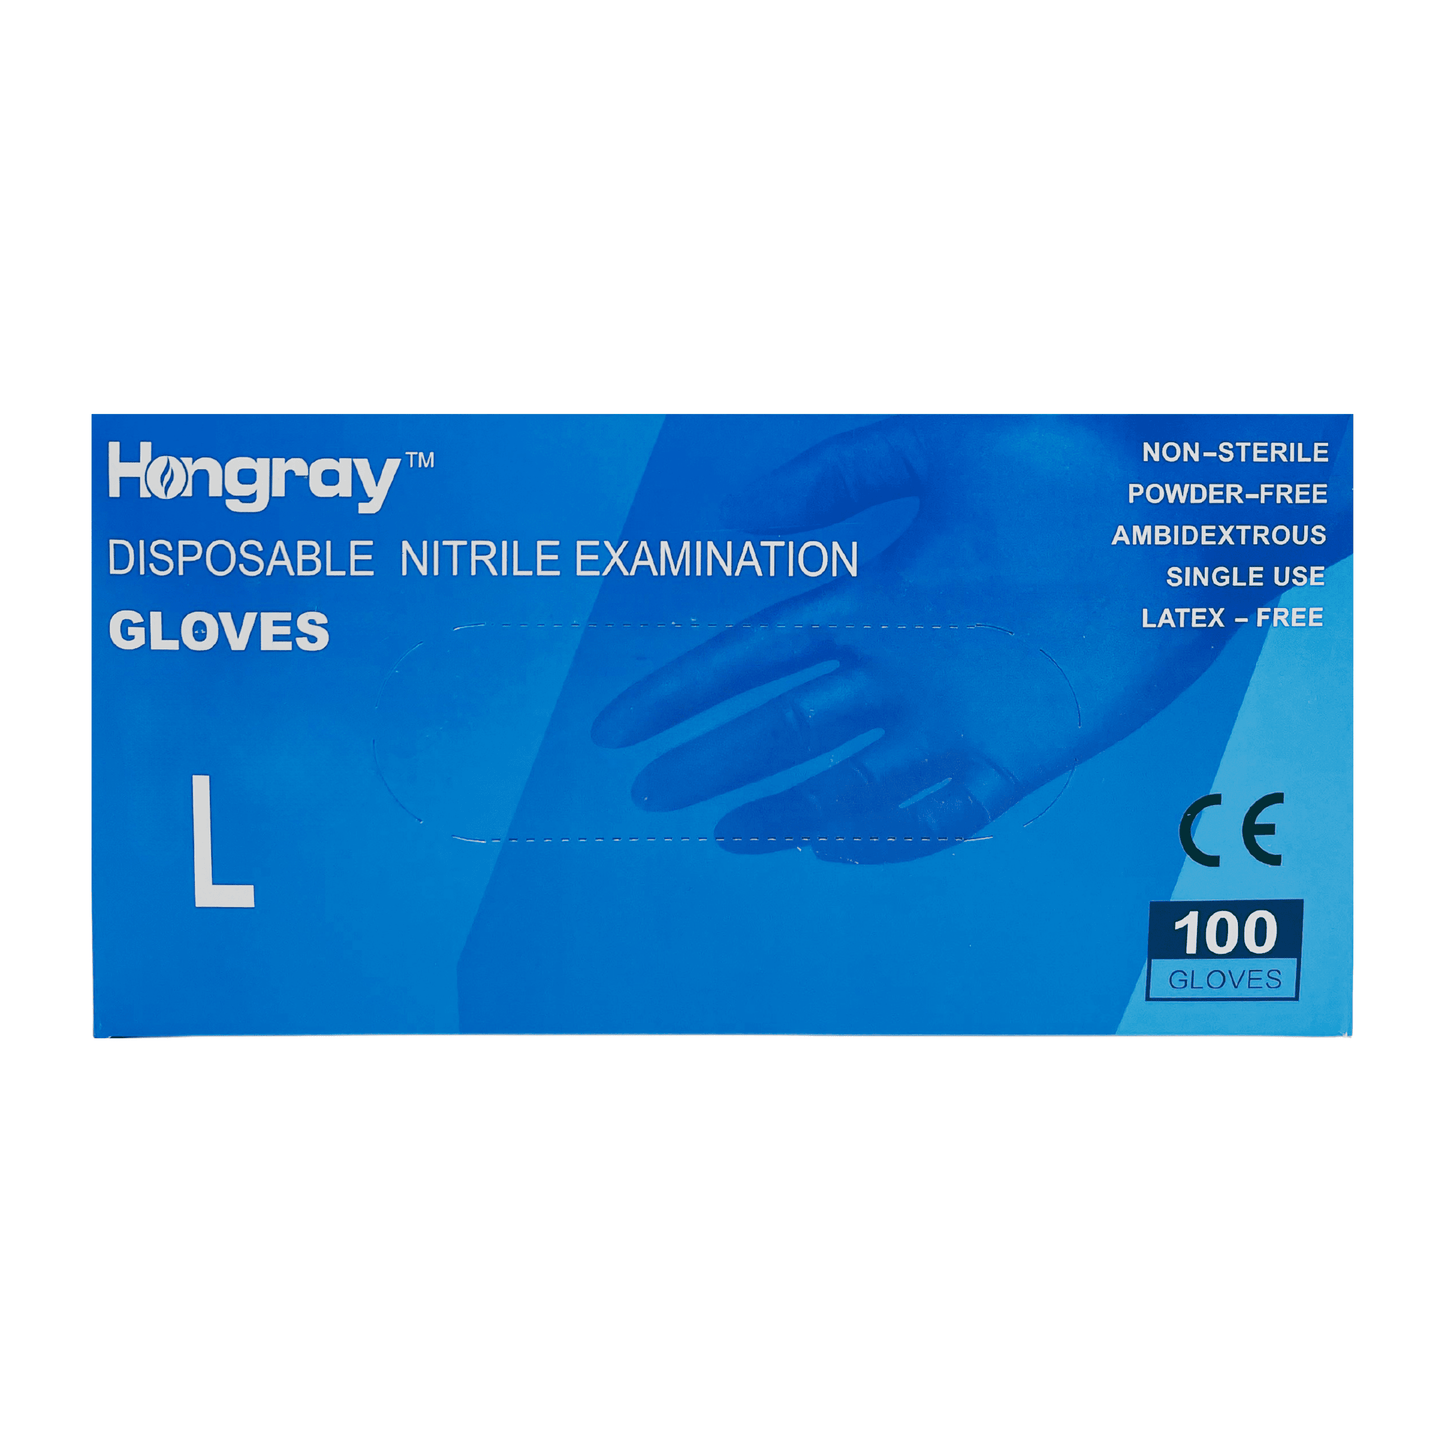 Hongray Disposable Nitrile Examination Gloves (Large)